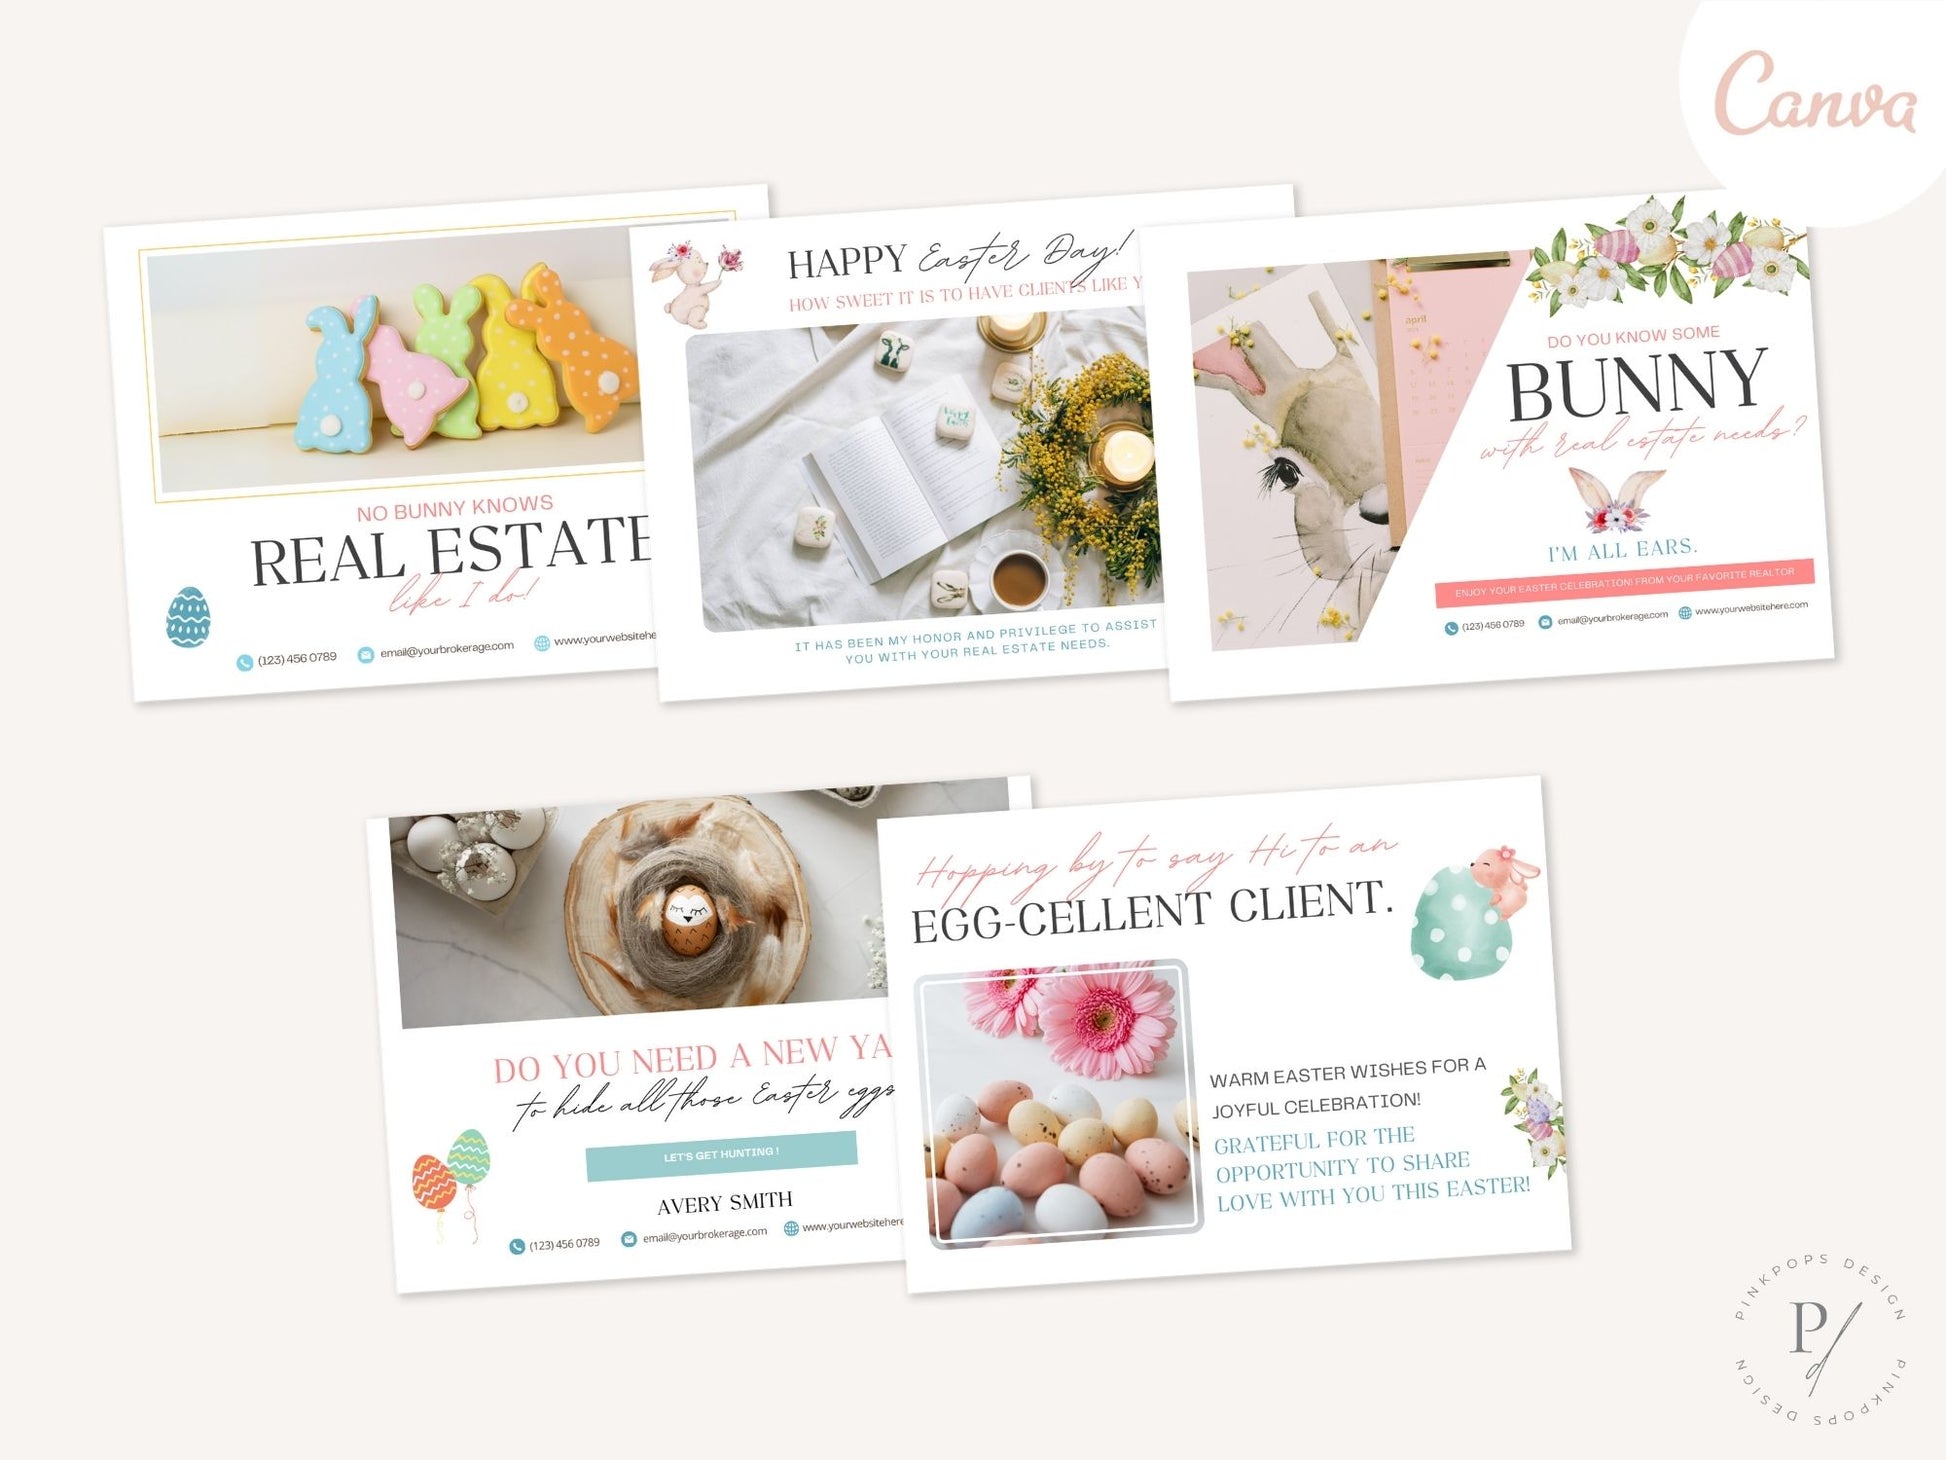 Easter Postcard Bundle - Charming postcards for festive real estate marketing during the Easter season.